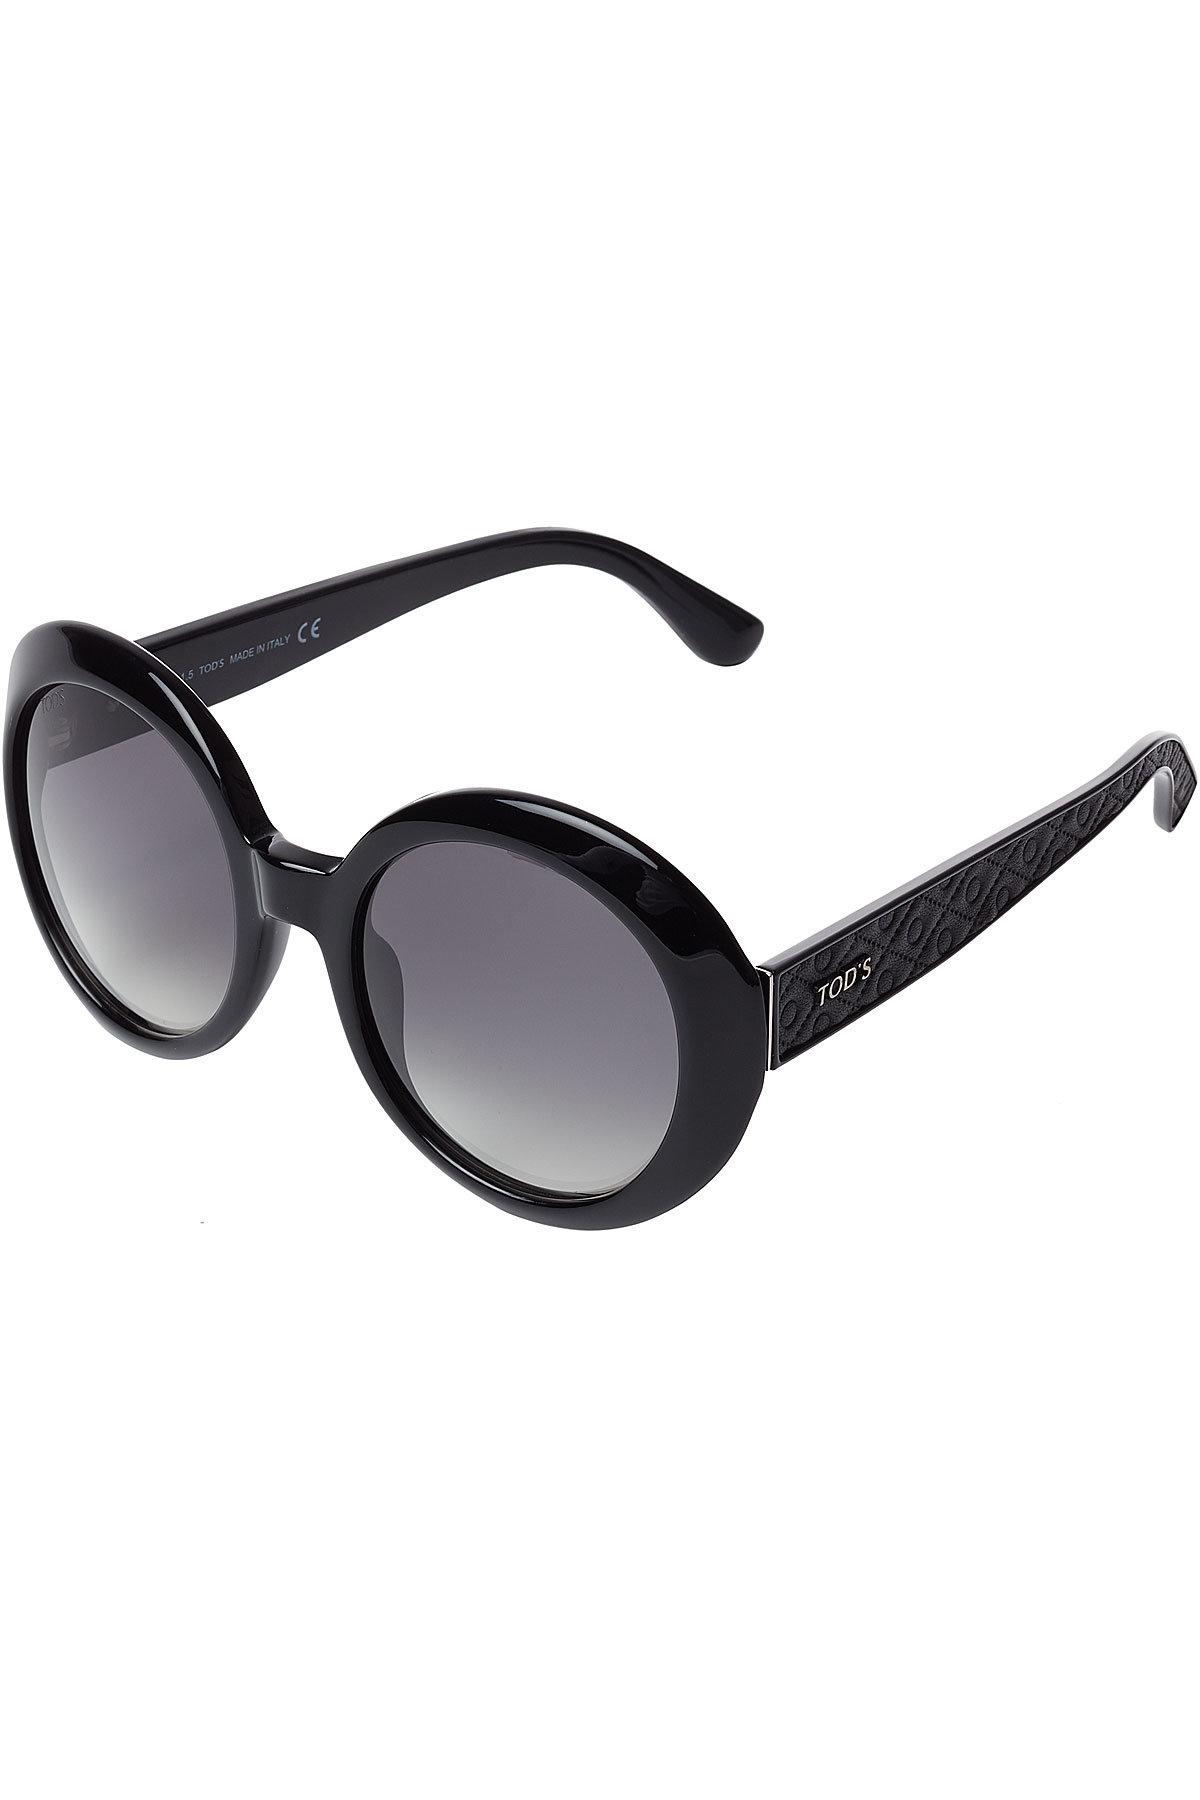 Lyst - Tod'S Oversize Sunglasses in Black